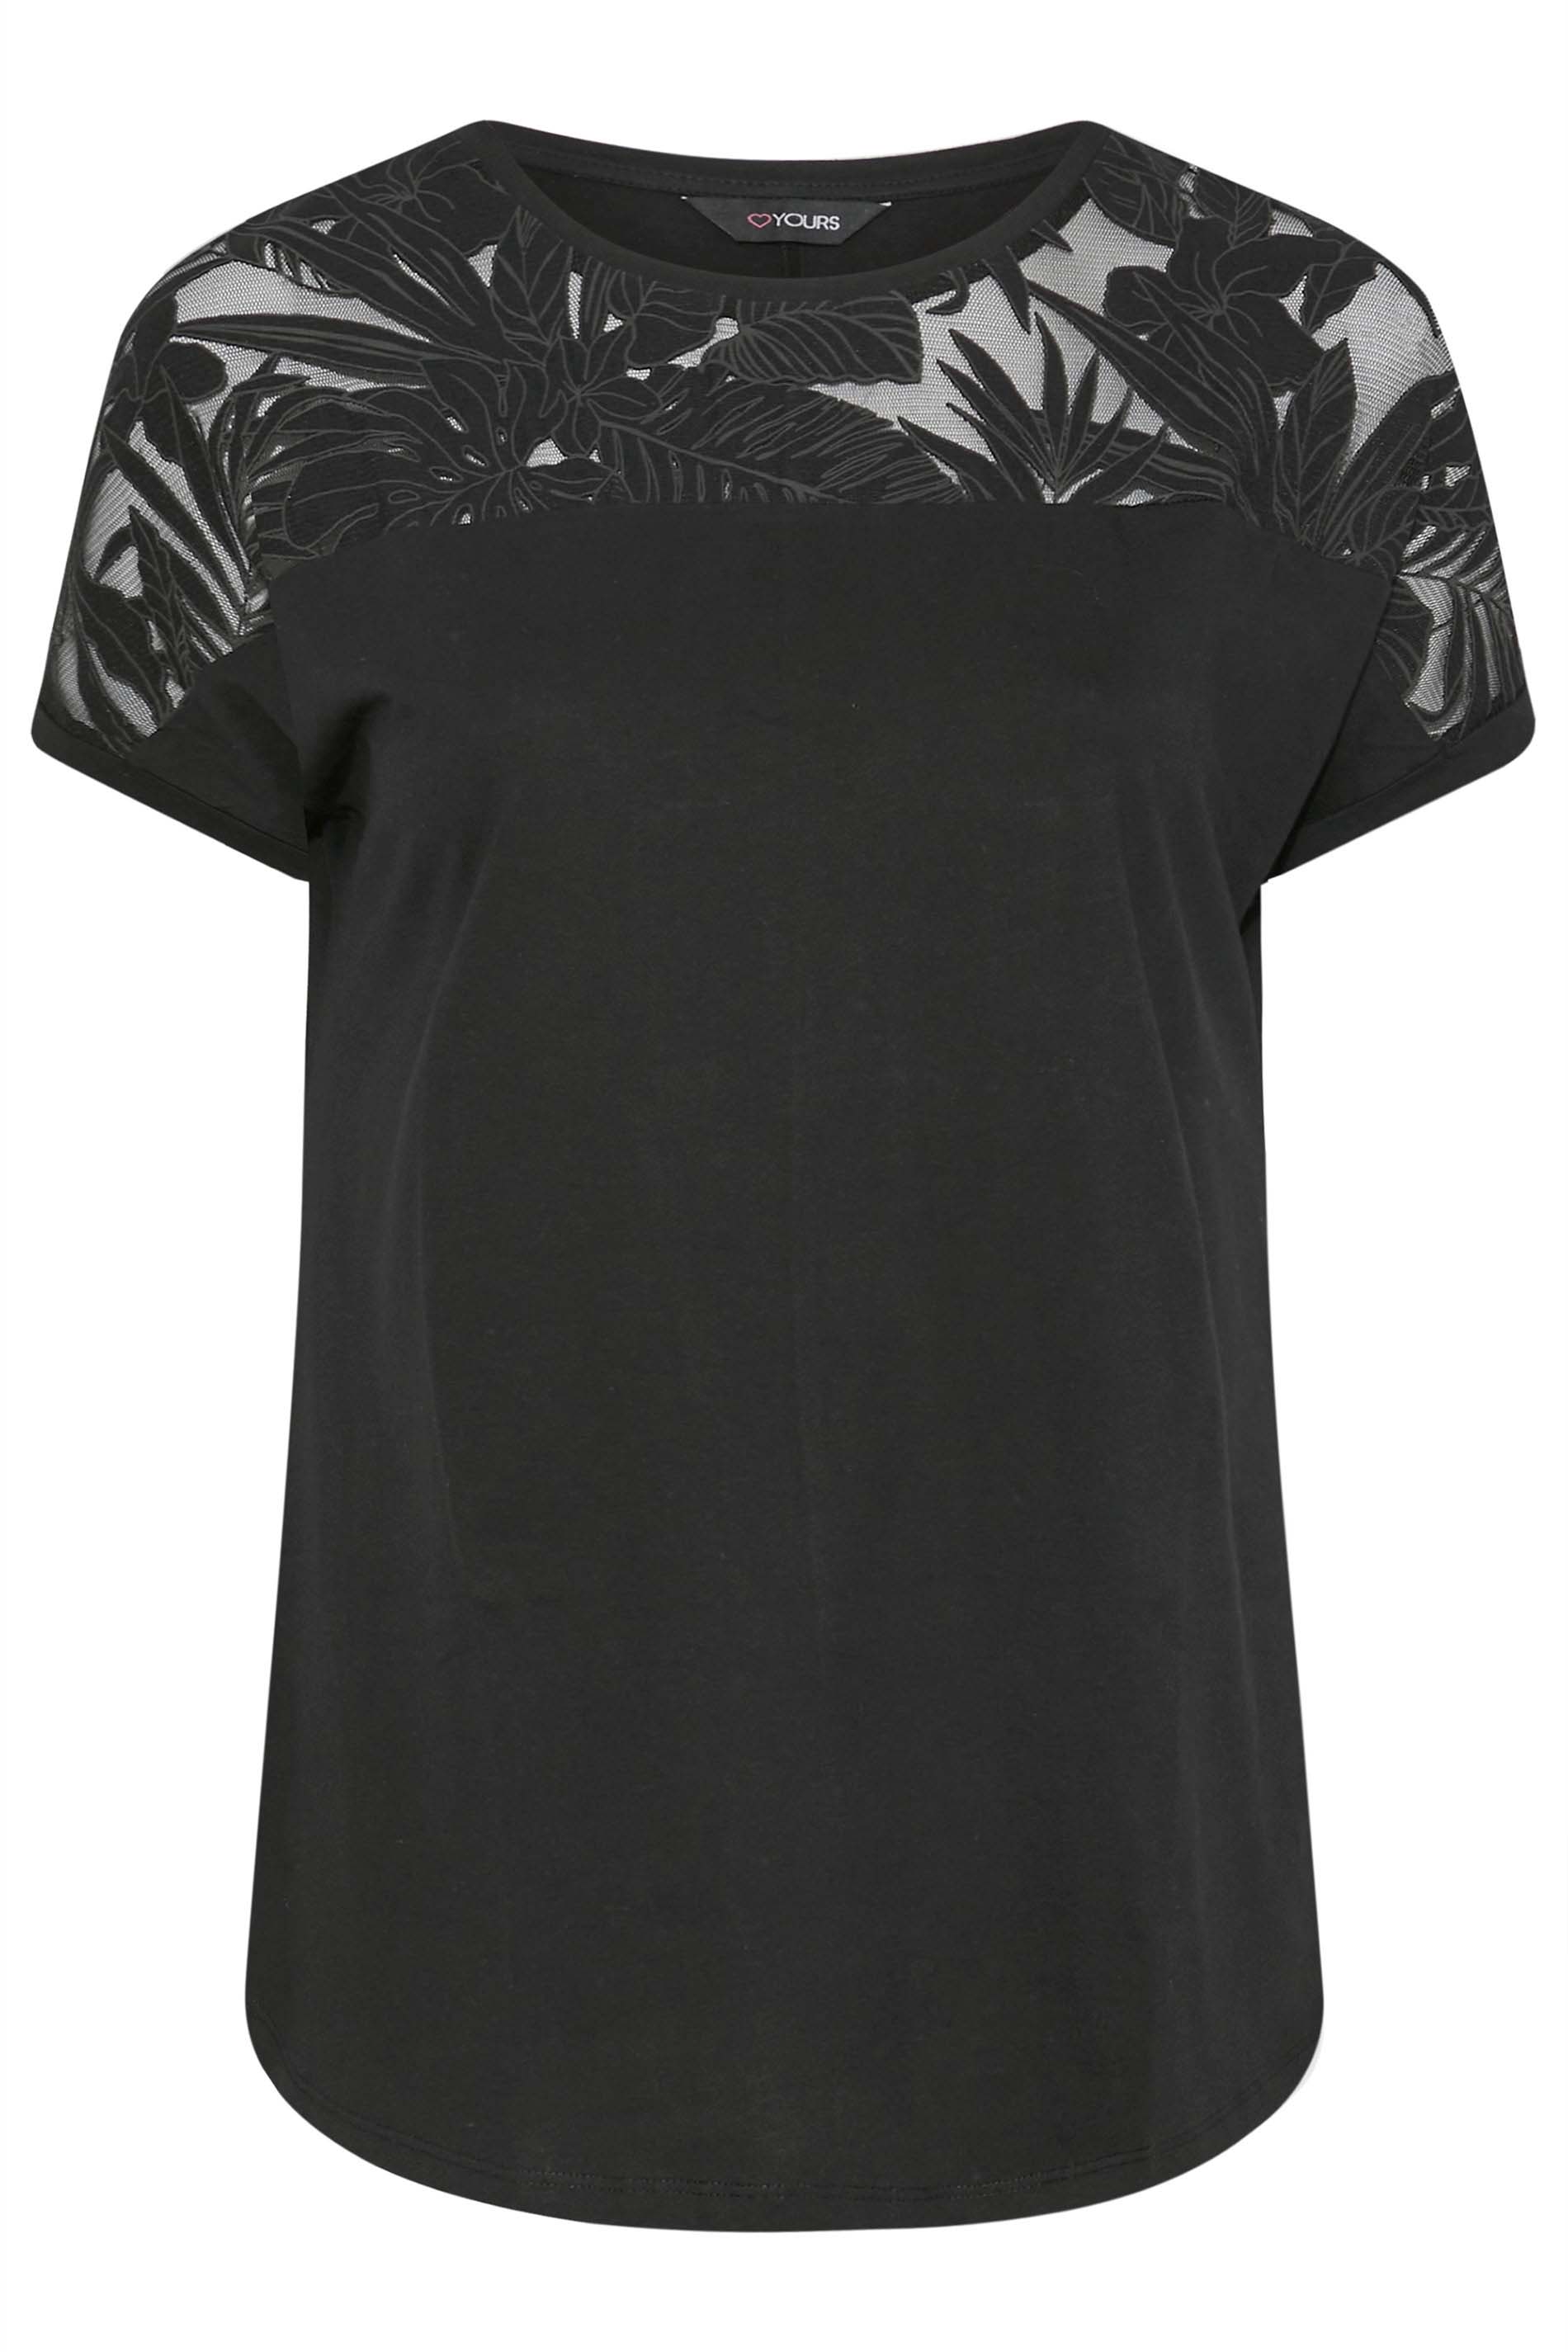 Plus Size Black Floral Mesh Panel T-Shirt | Yours Clothing